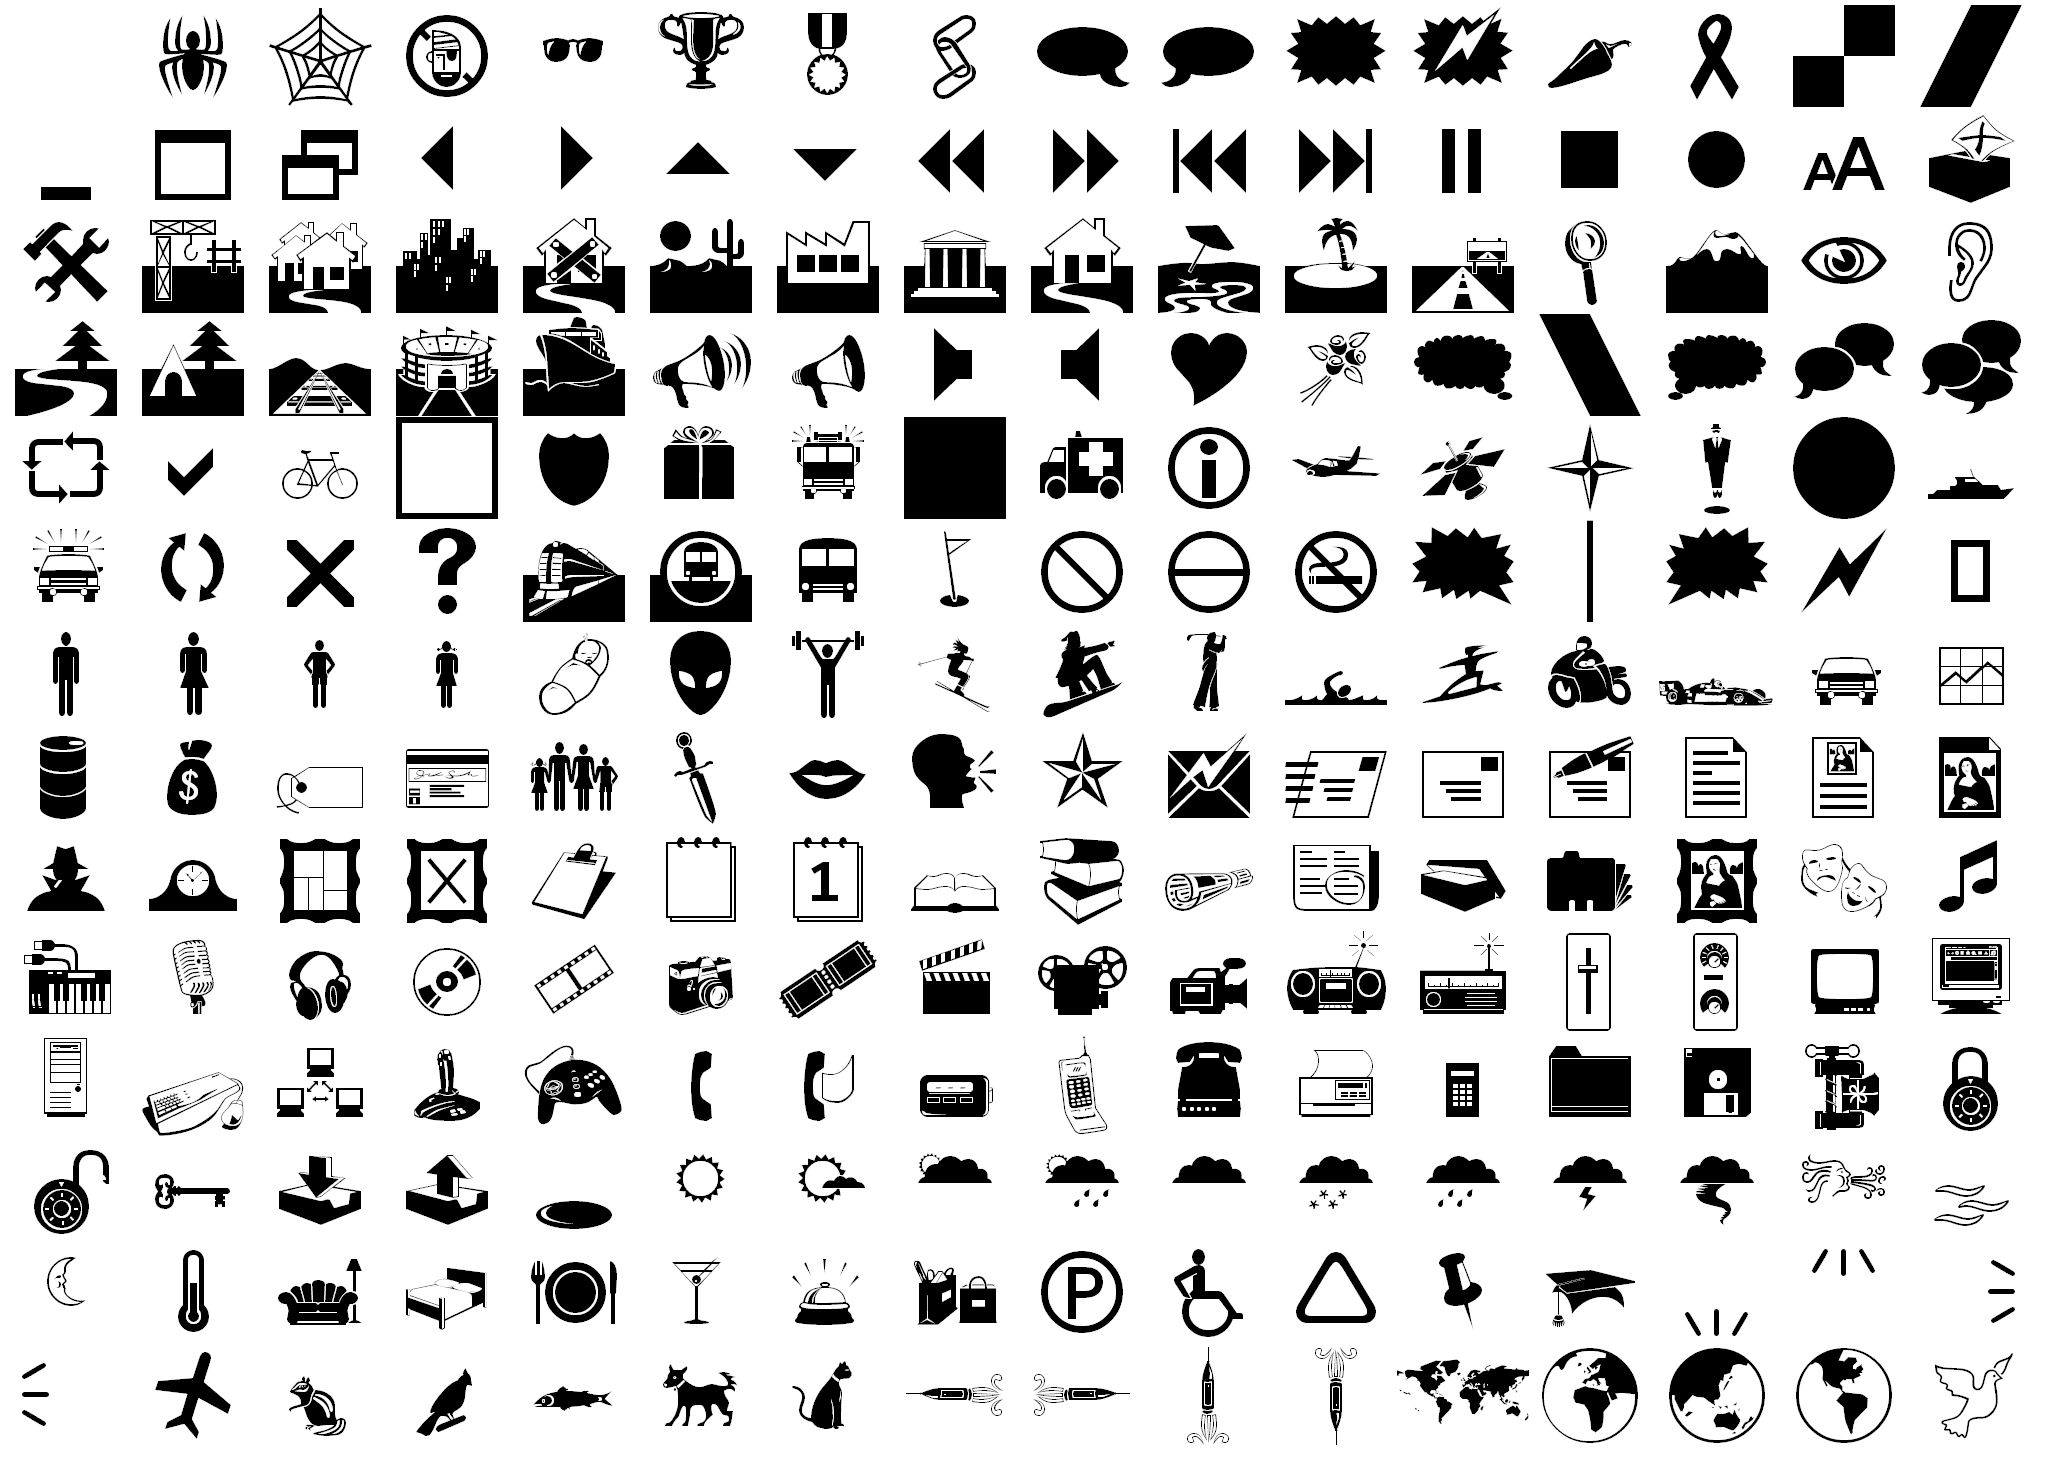 Webdings Font Symbols Chart